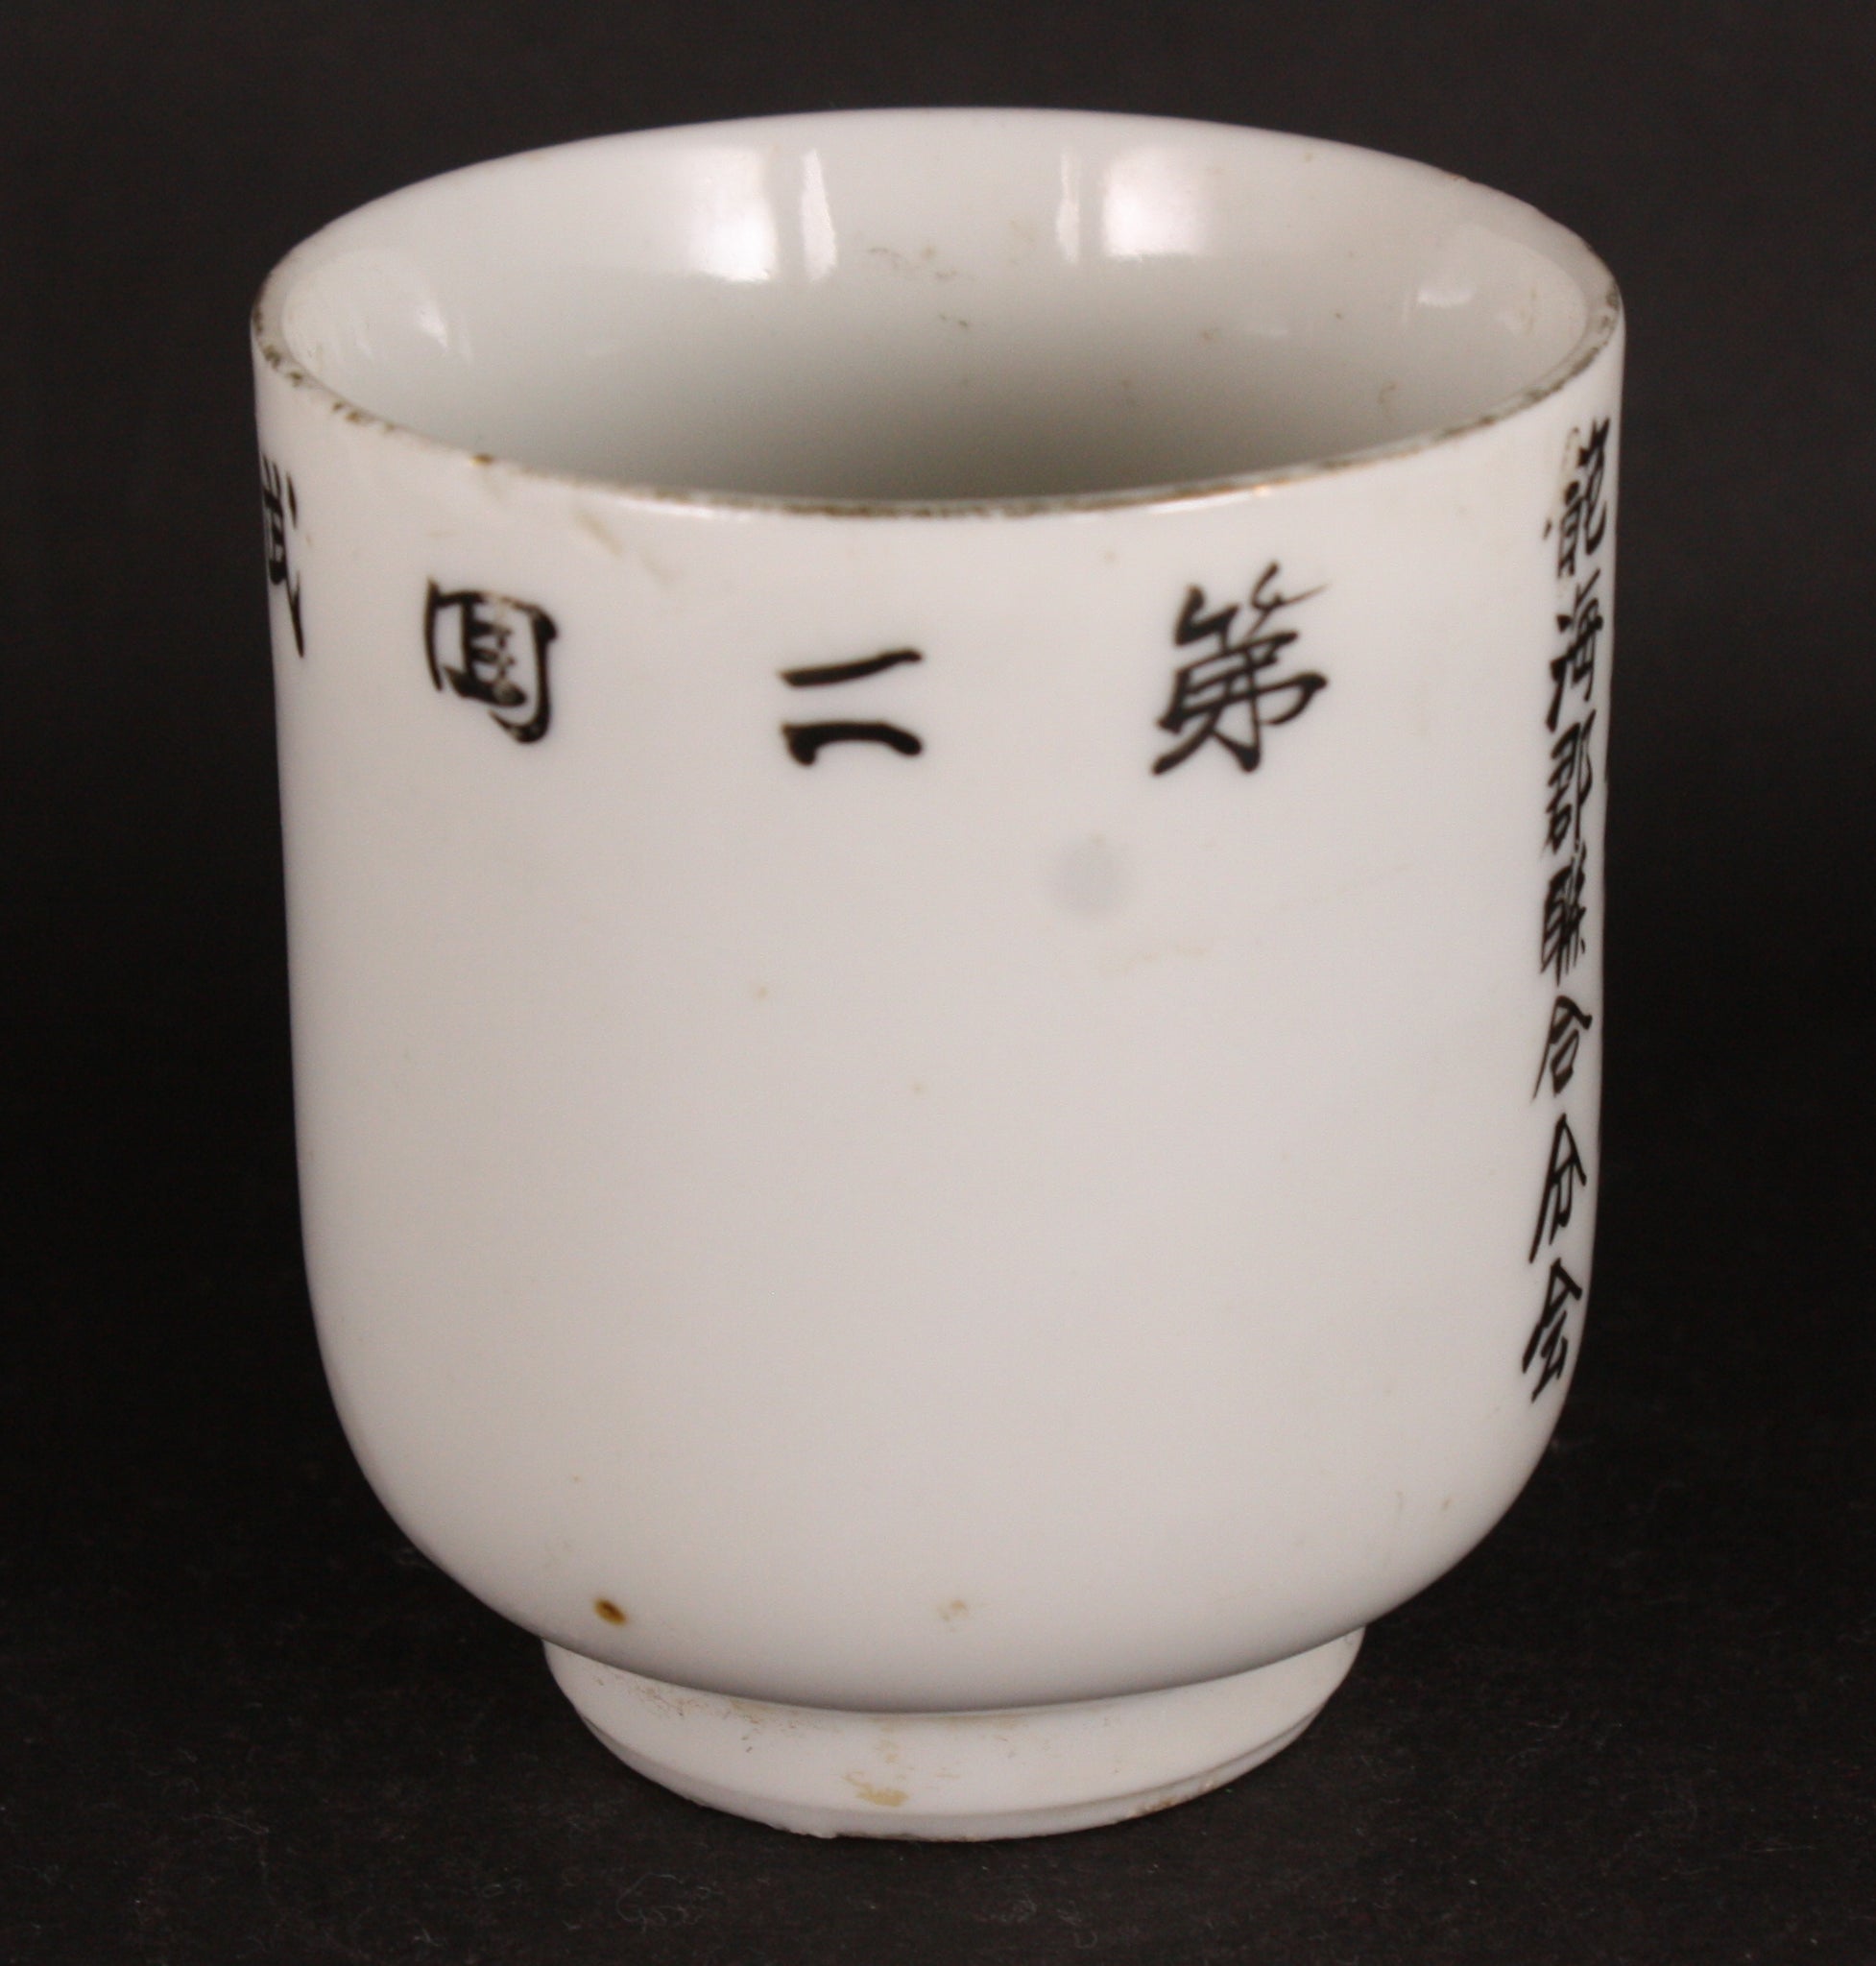 Antique Japanese Military Veterans Association Martial Arts Competition Tea Cup